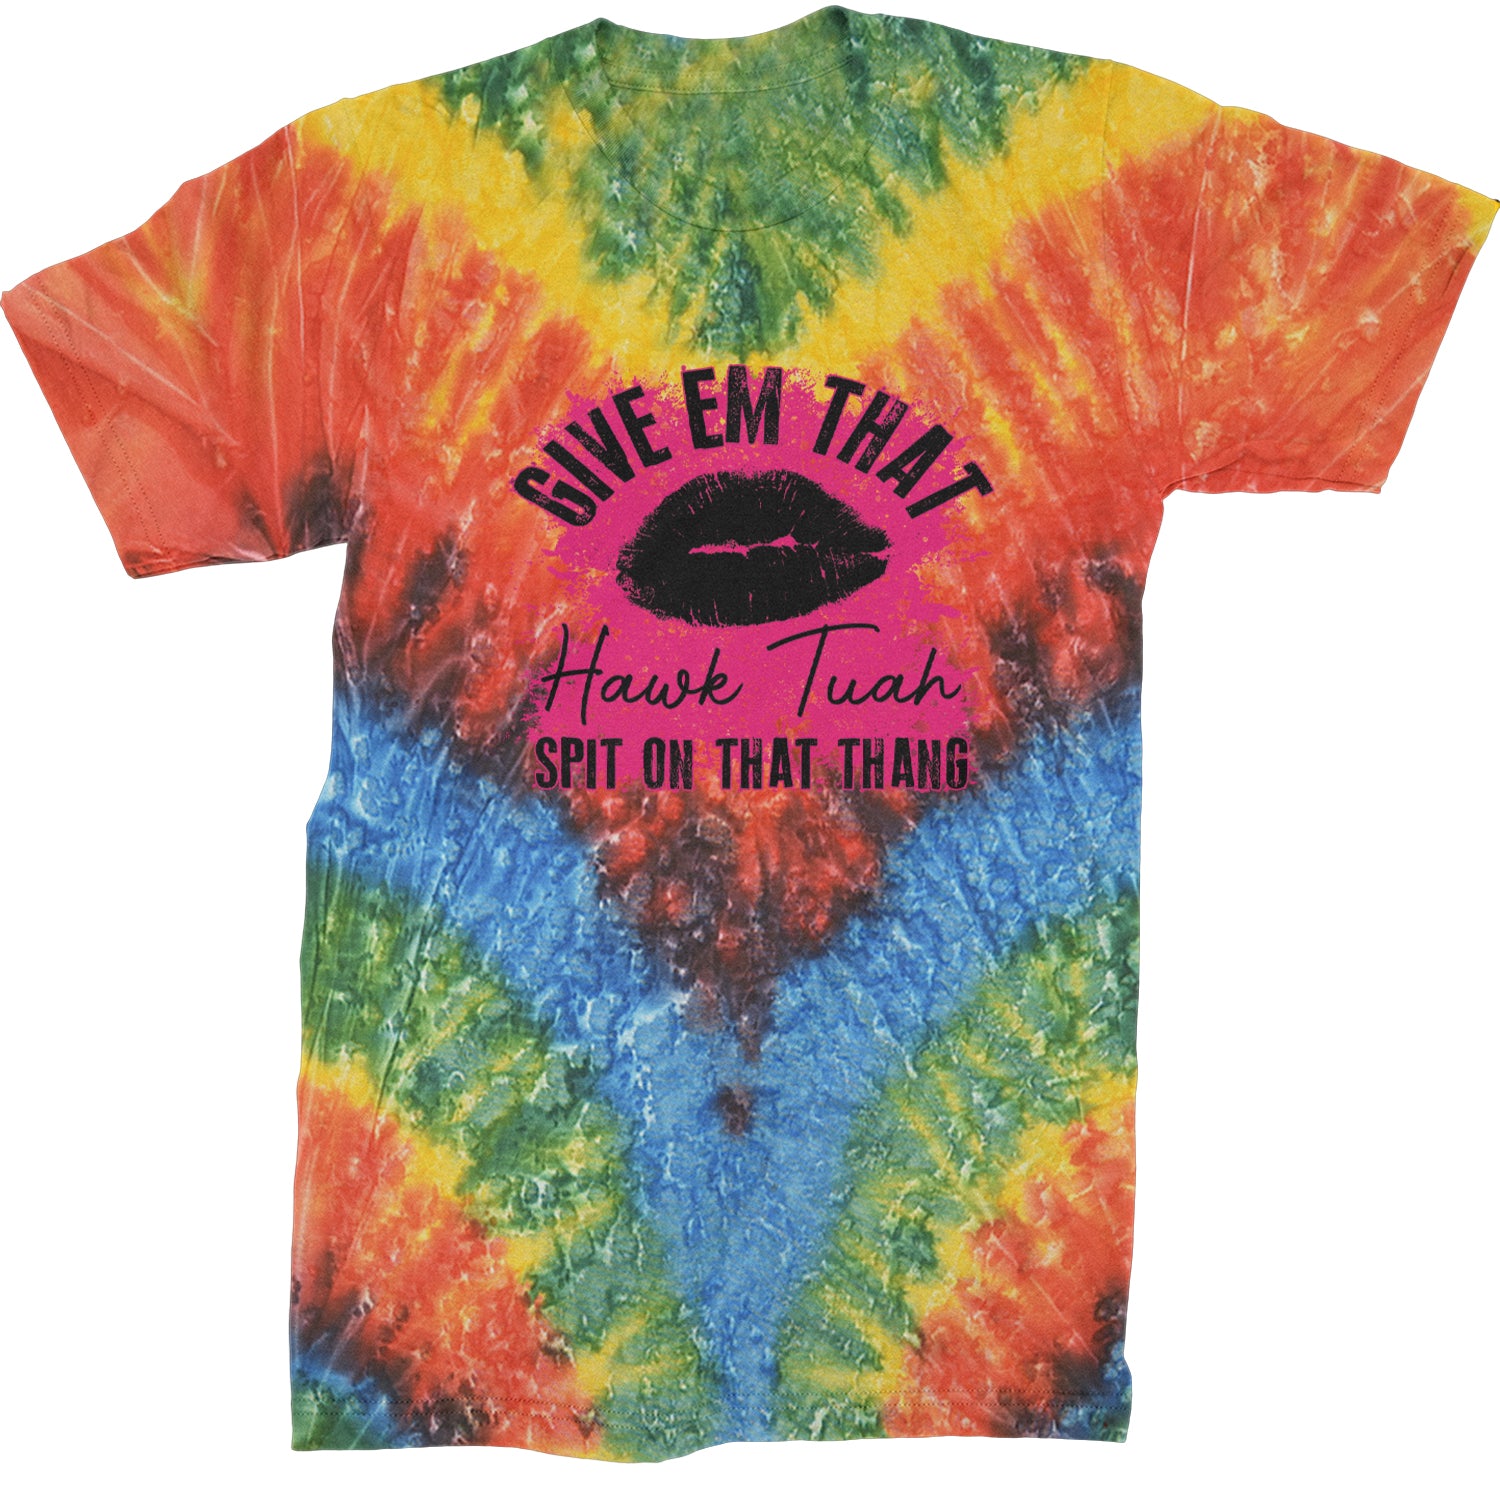 Give 'Em Hawk Tuah Spit On That Thang Mens T-shirt Tie-Dye Woodstock